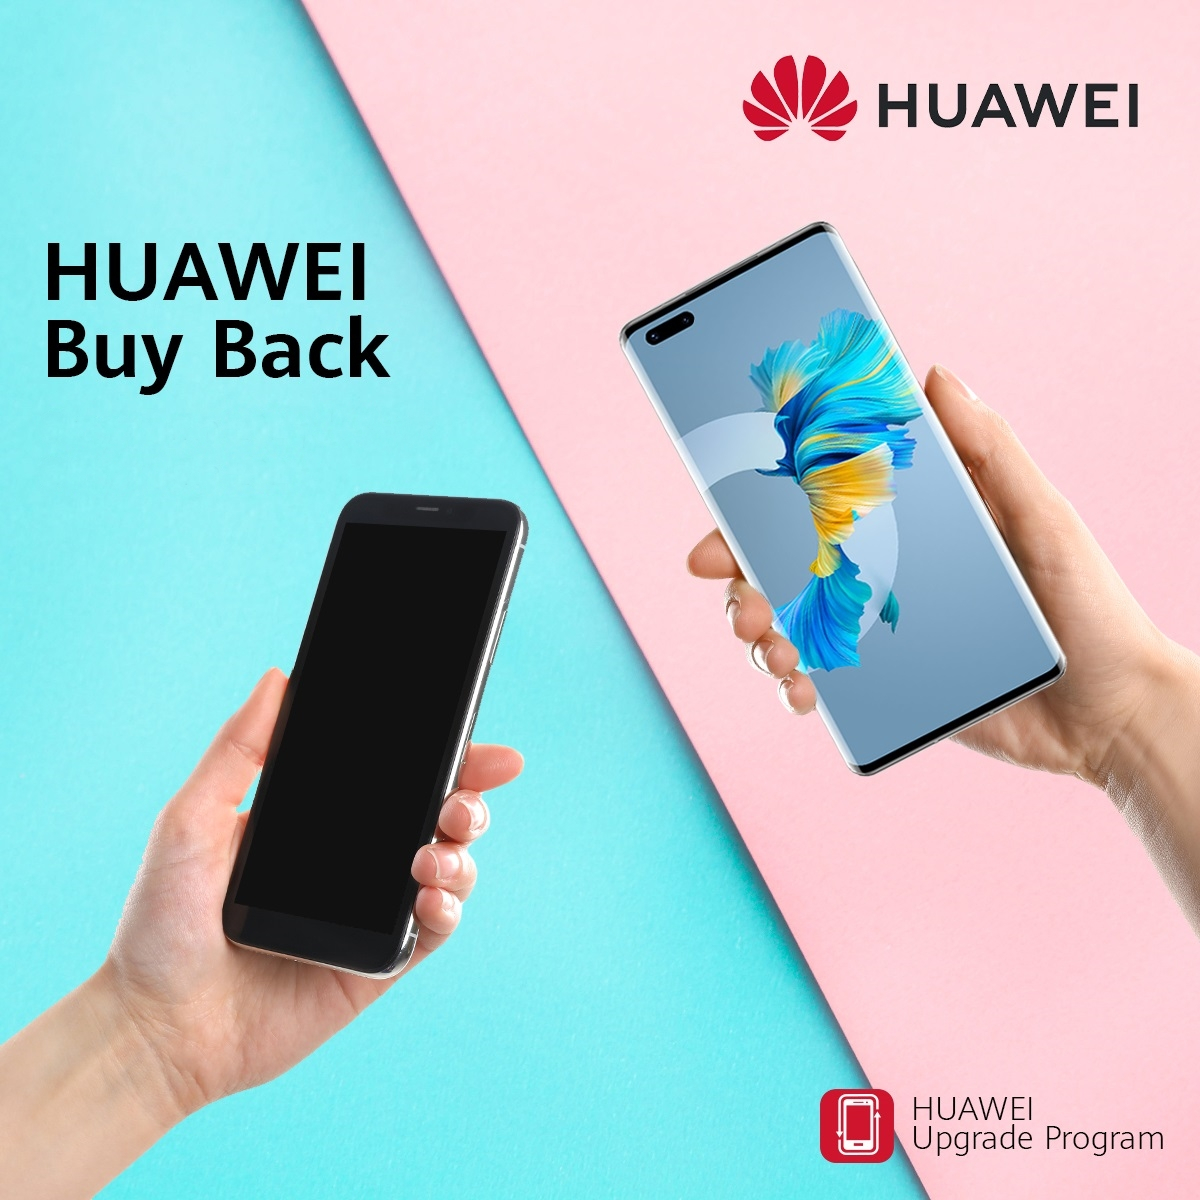 Programul de Buy Back al Huawei devine disponibil permanent